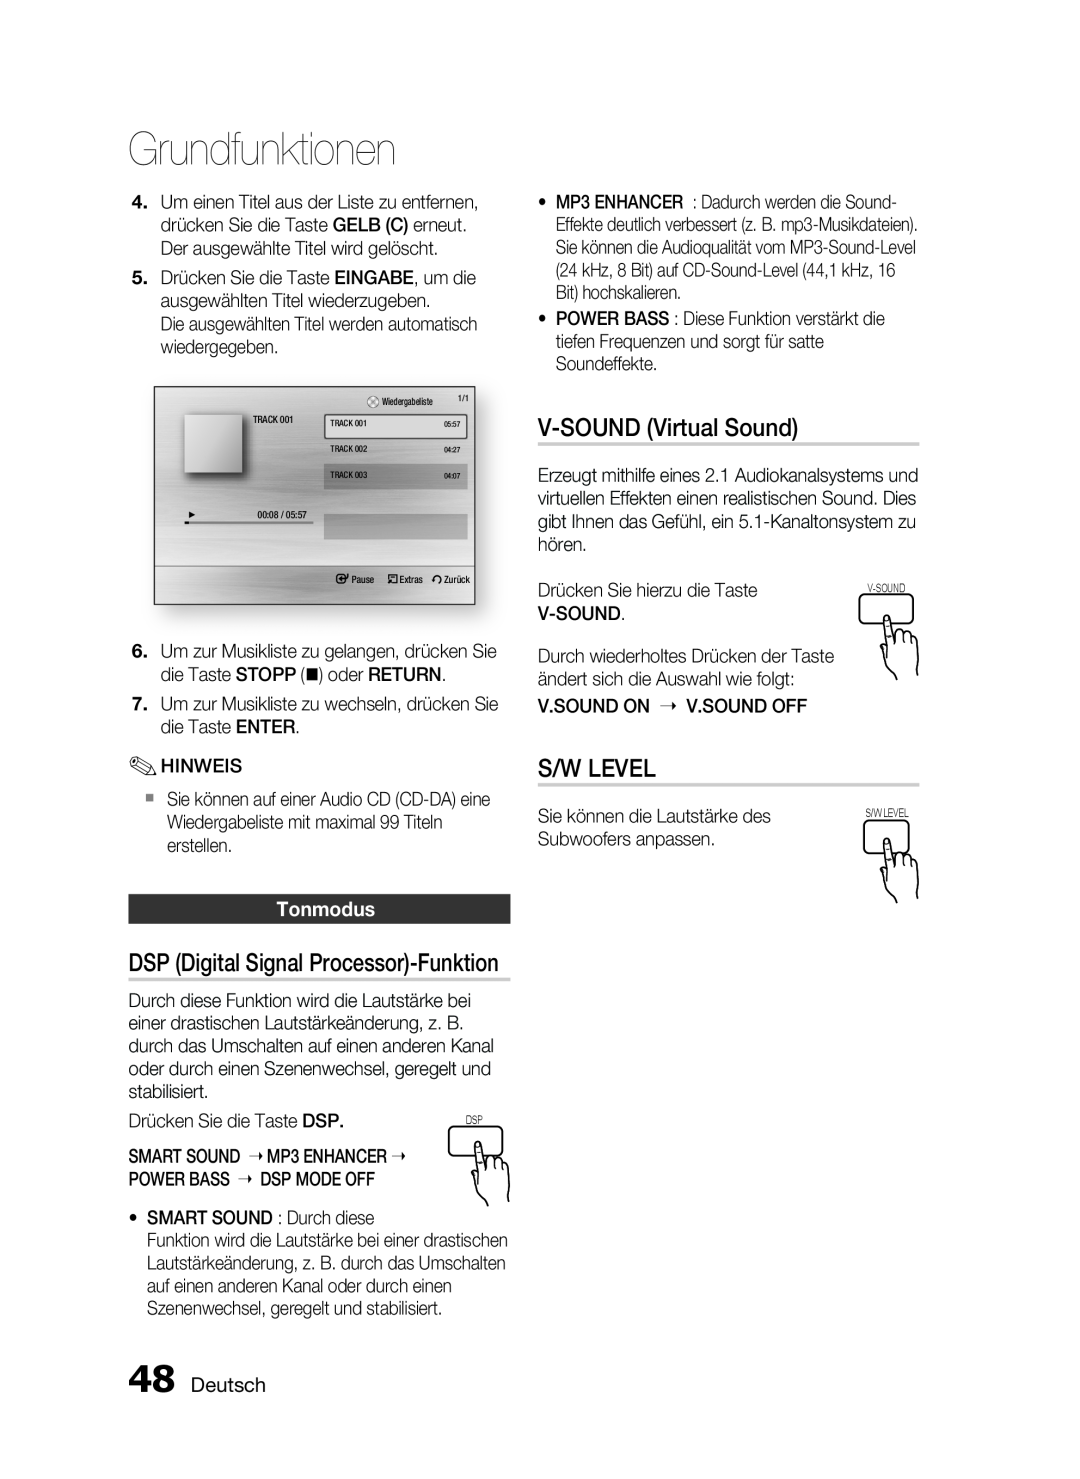 Samsung HT-C6200/XEN manual V-SOUND Virtual Sound, S/W Level, DSP Digital Signal Processor-Funktion, Tonmodus, Deutsch 